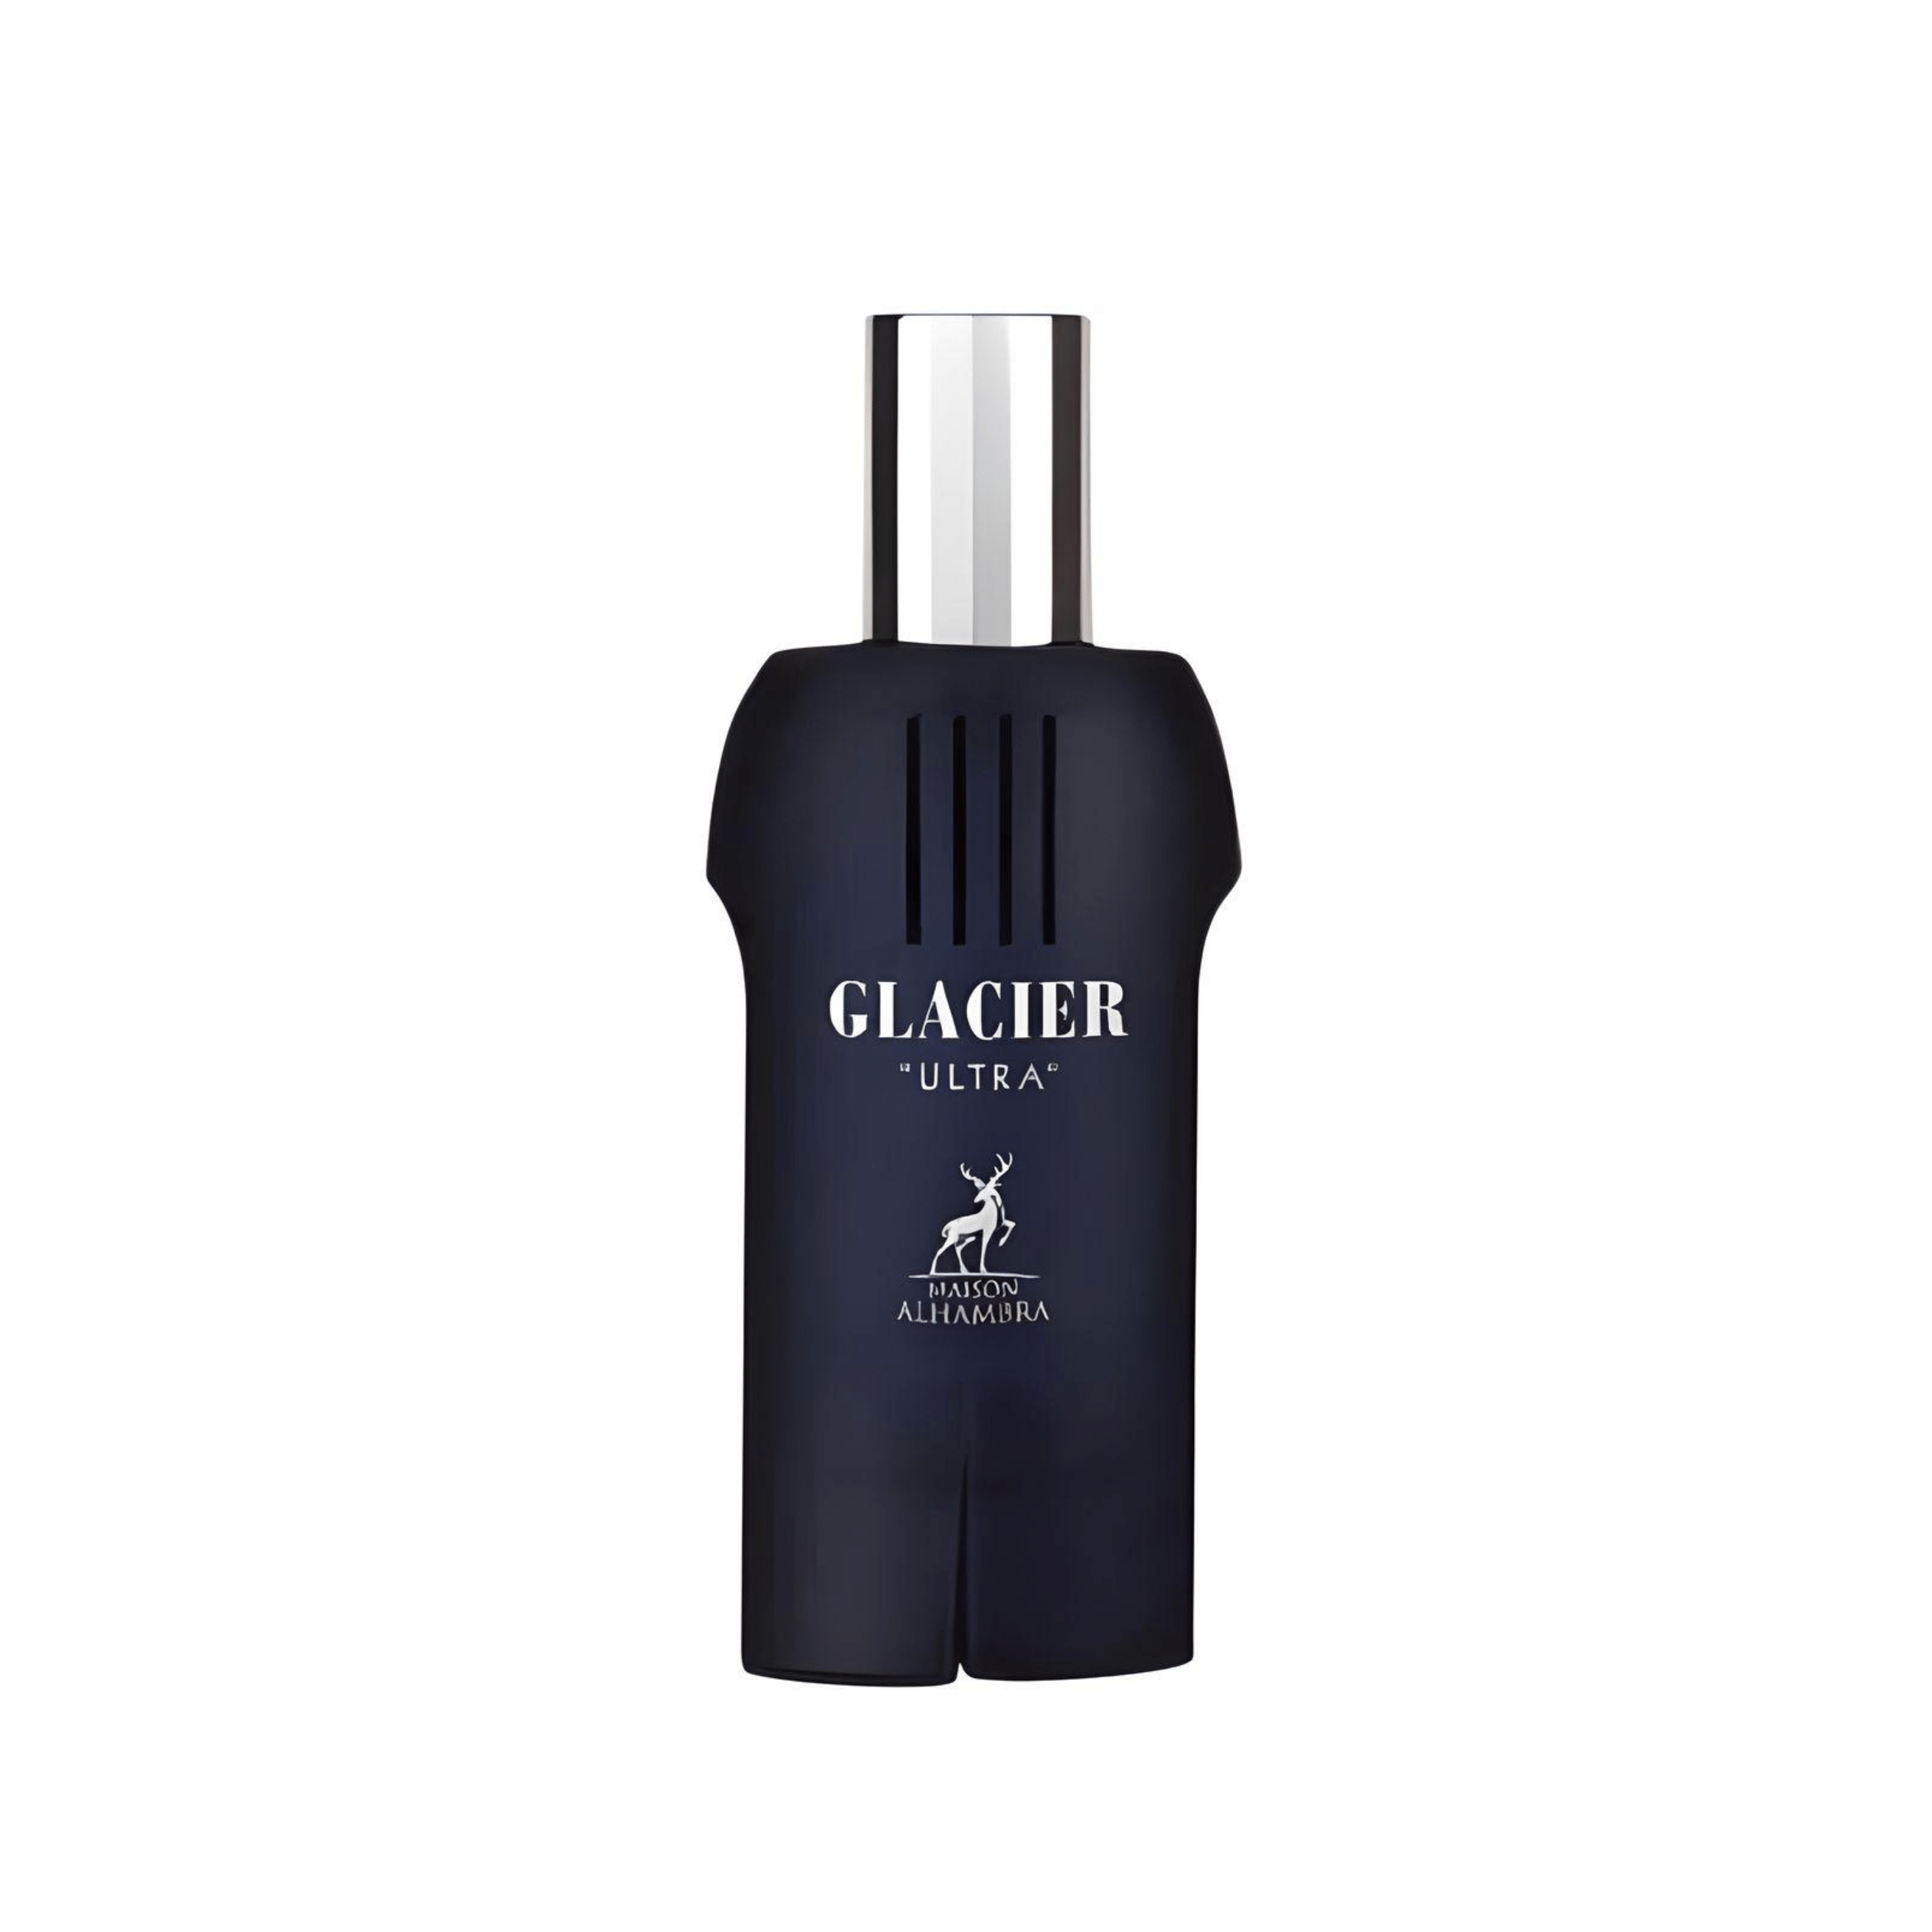 Glacier Ultra Perfume / Eau De Parfum By Maison Alhambra / Lattafa (Inspired By Ultra Male - Jpg)